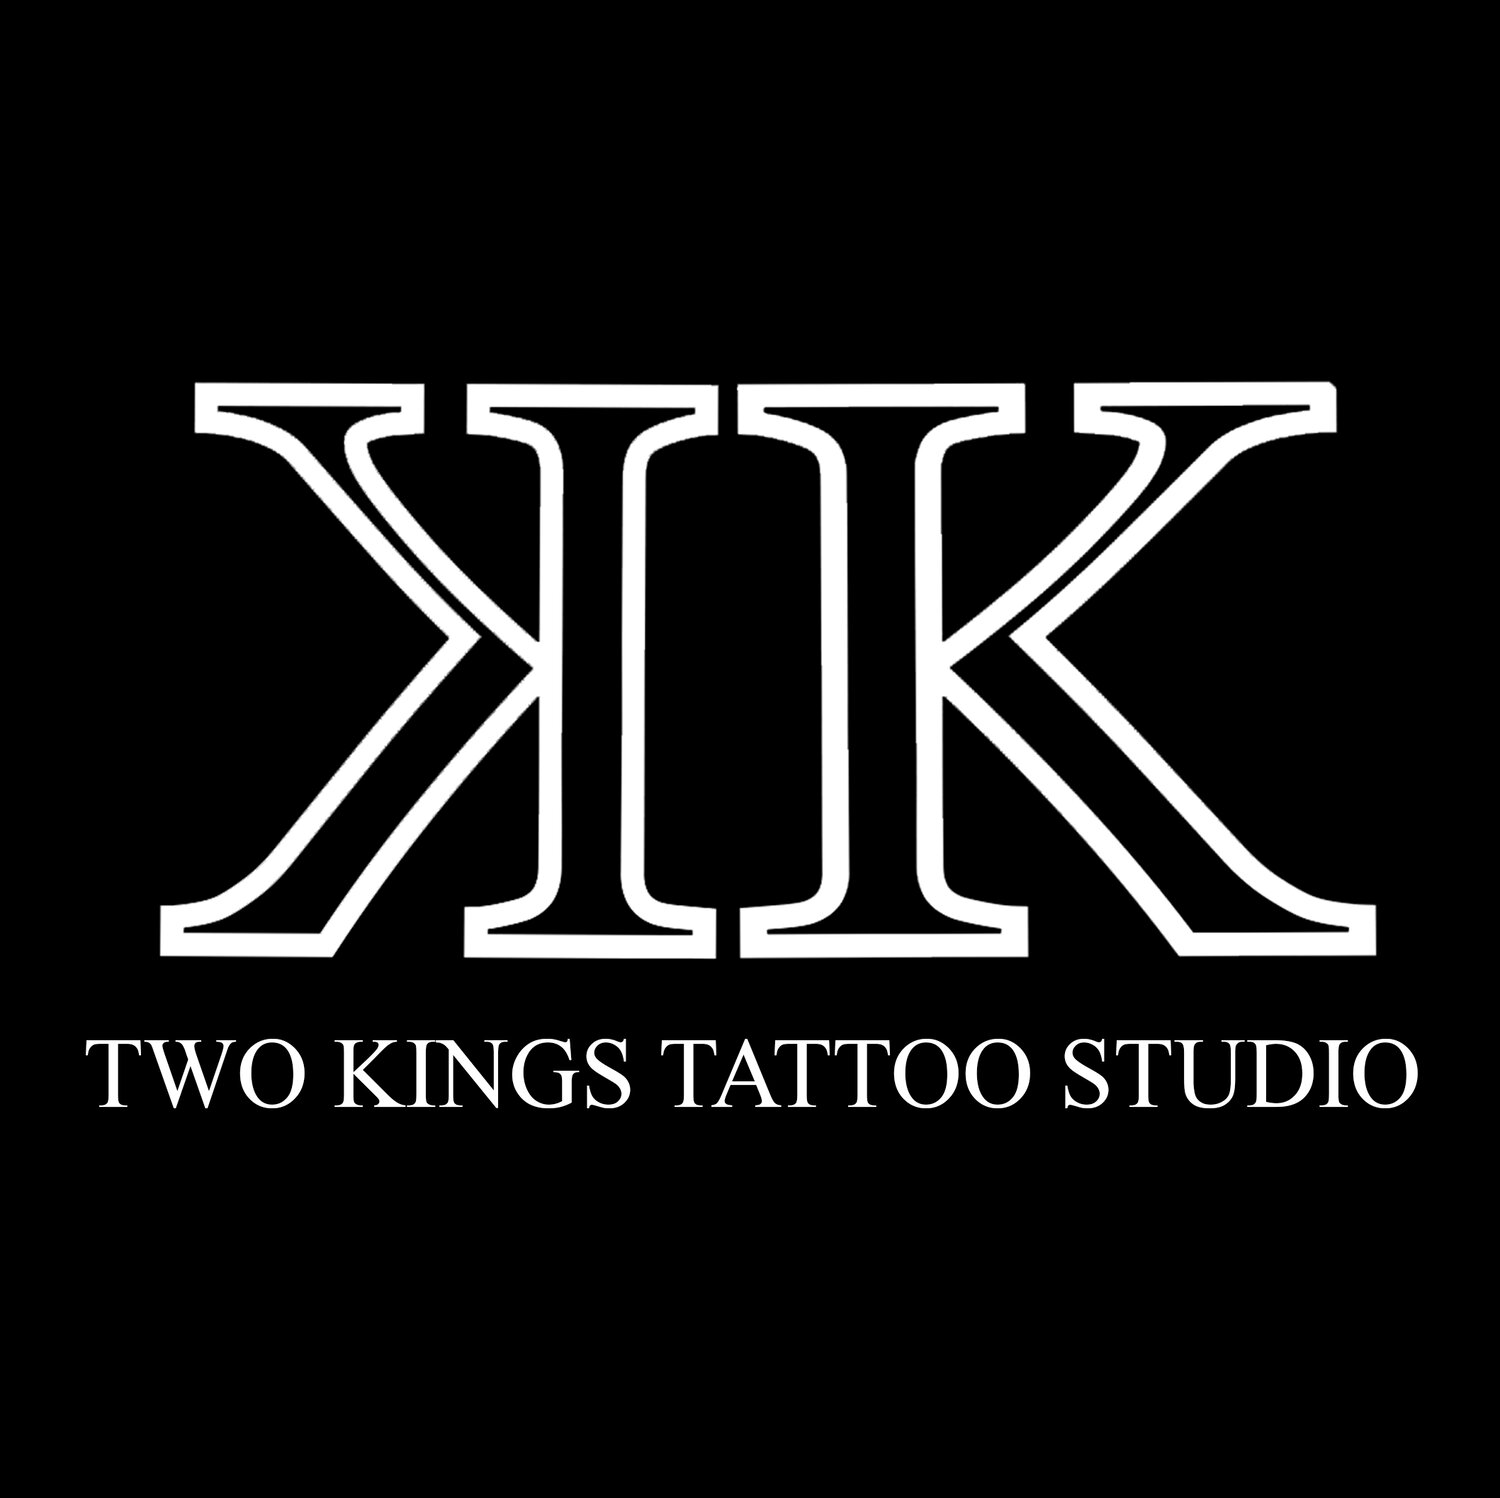 Two Kings Tattoo Studio